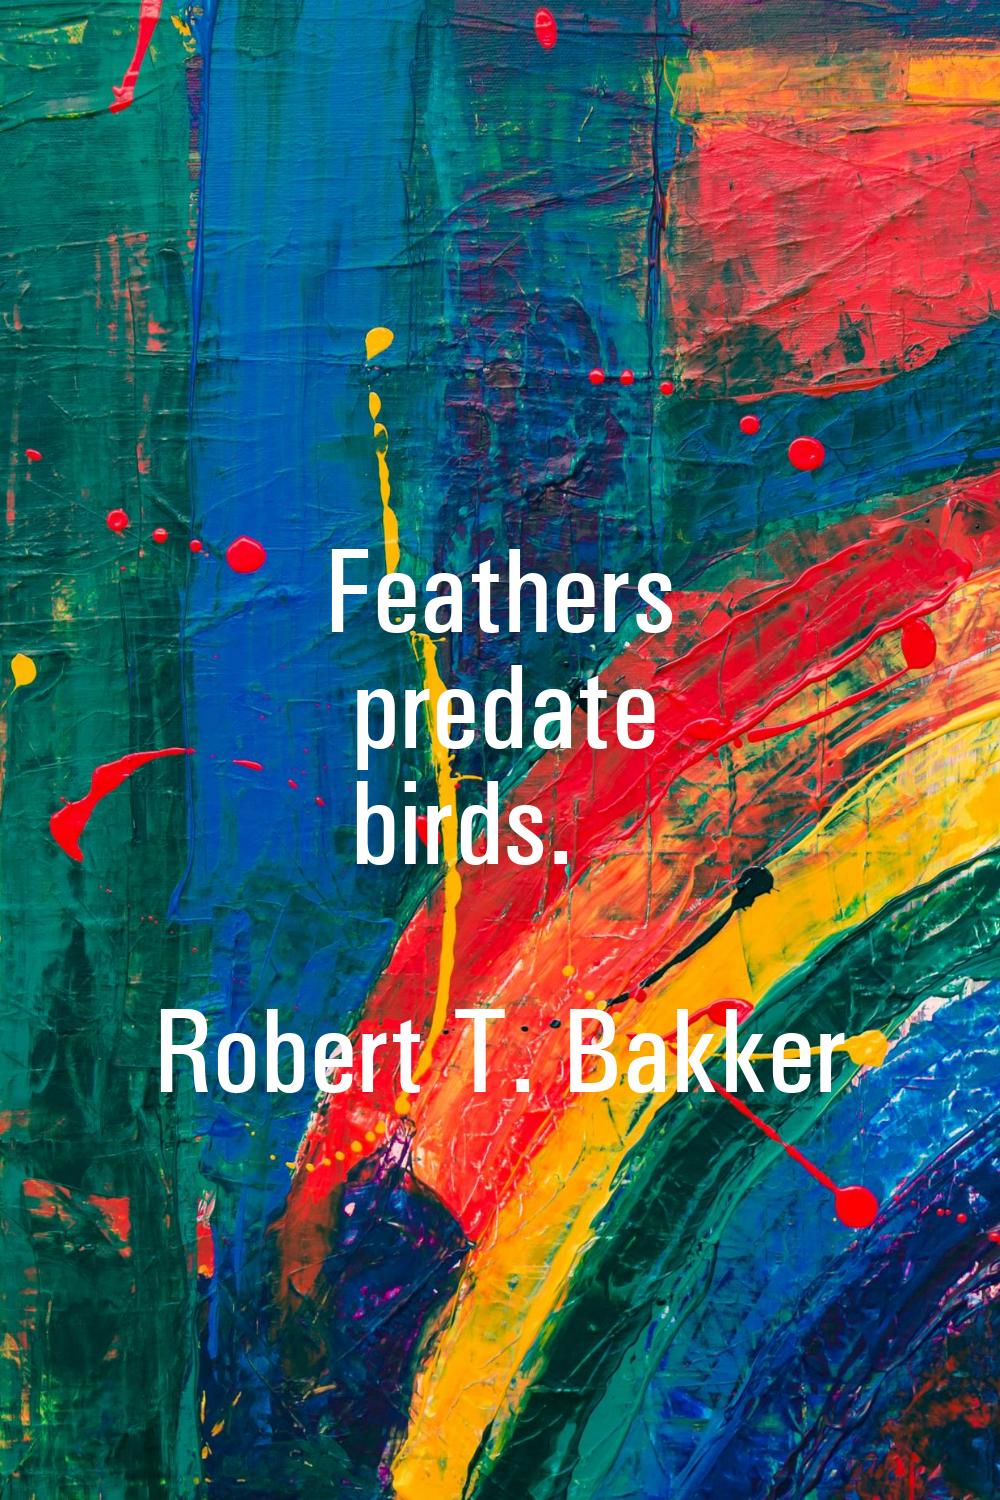 Feathers predate birds.